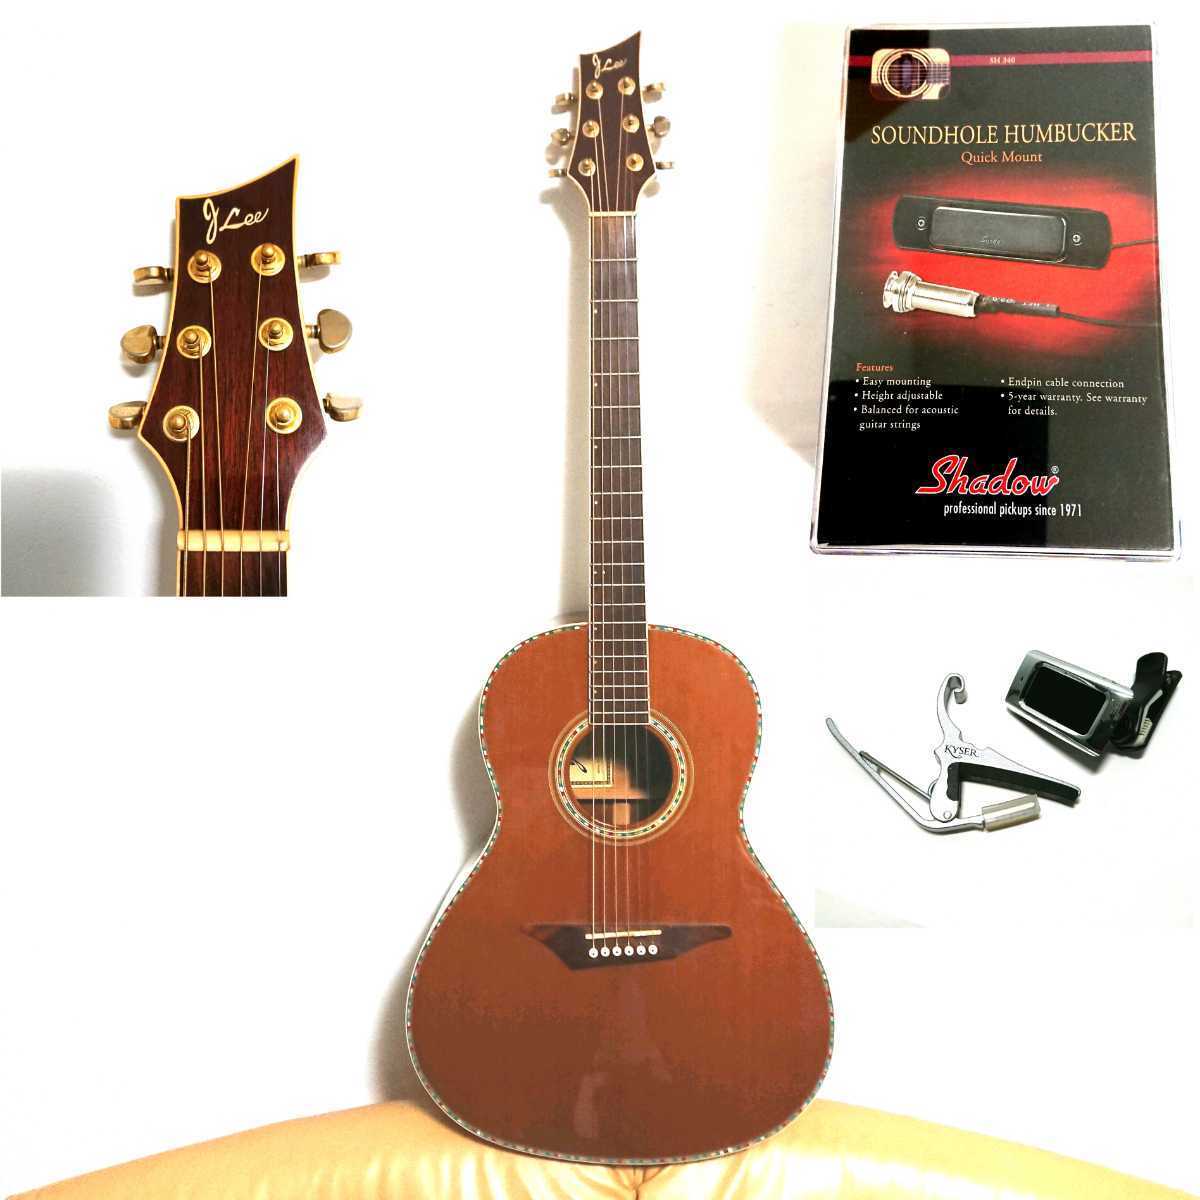 J.Lee SJK―900 アコースティックギター 新品未使用 Shadow SH-340